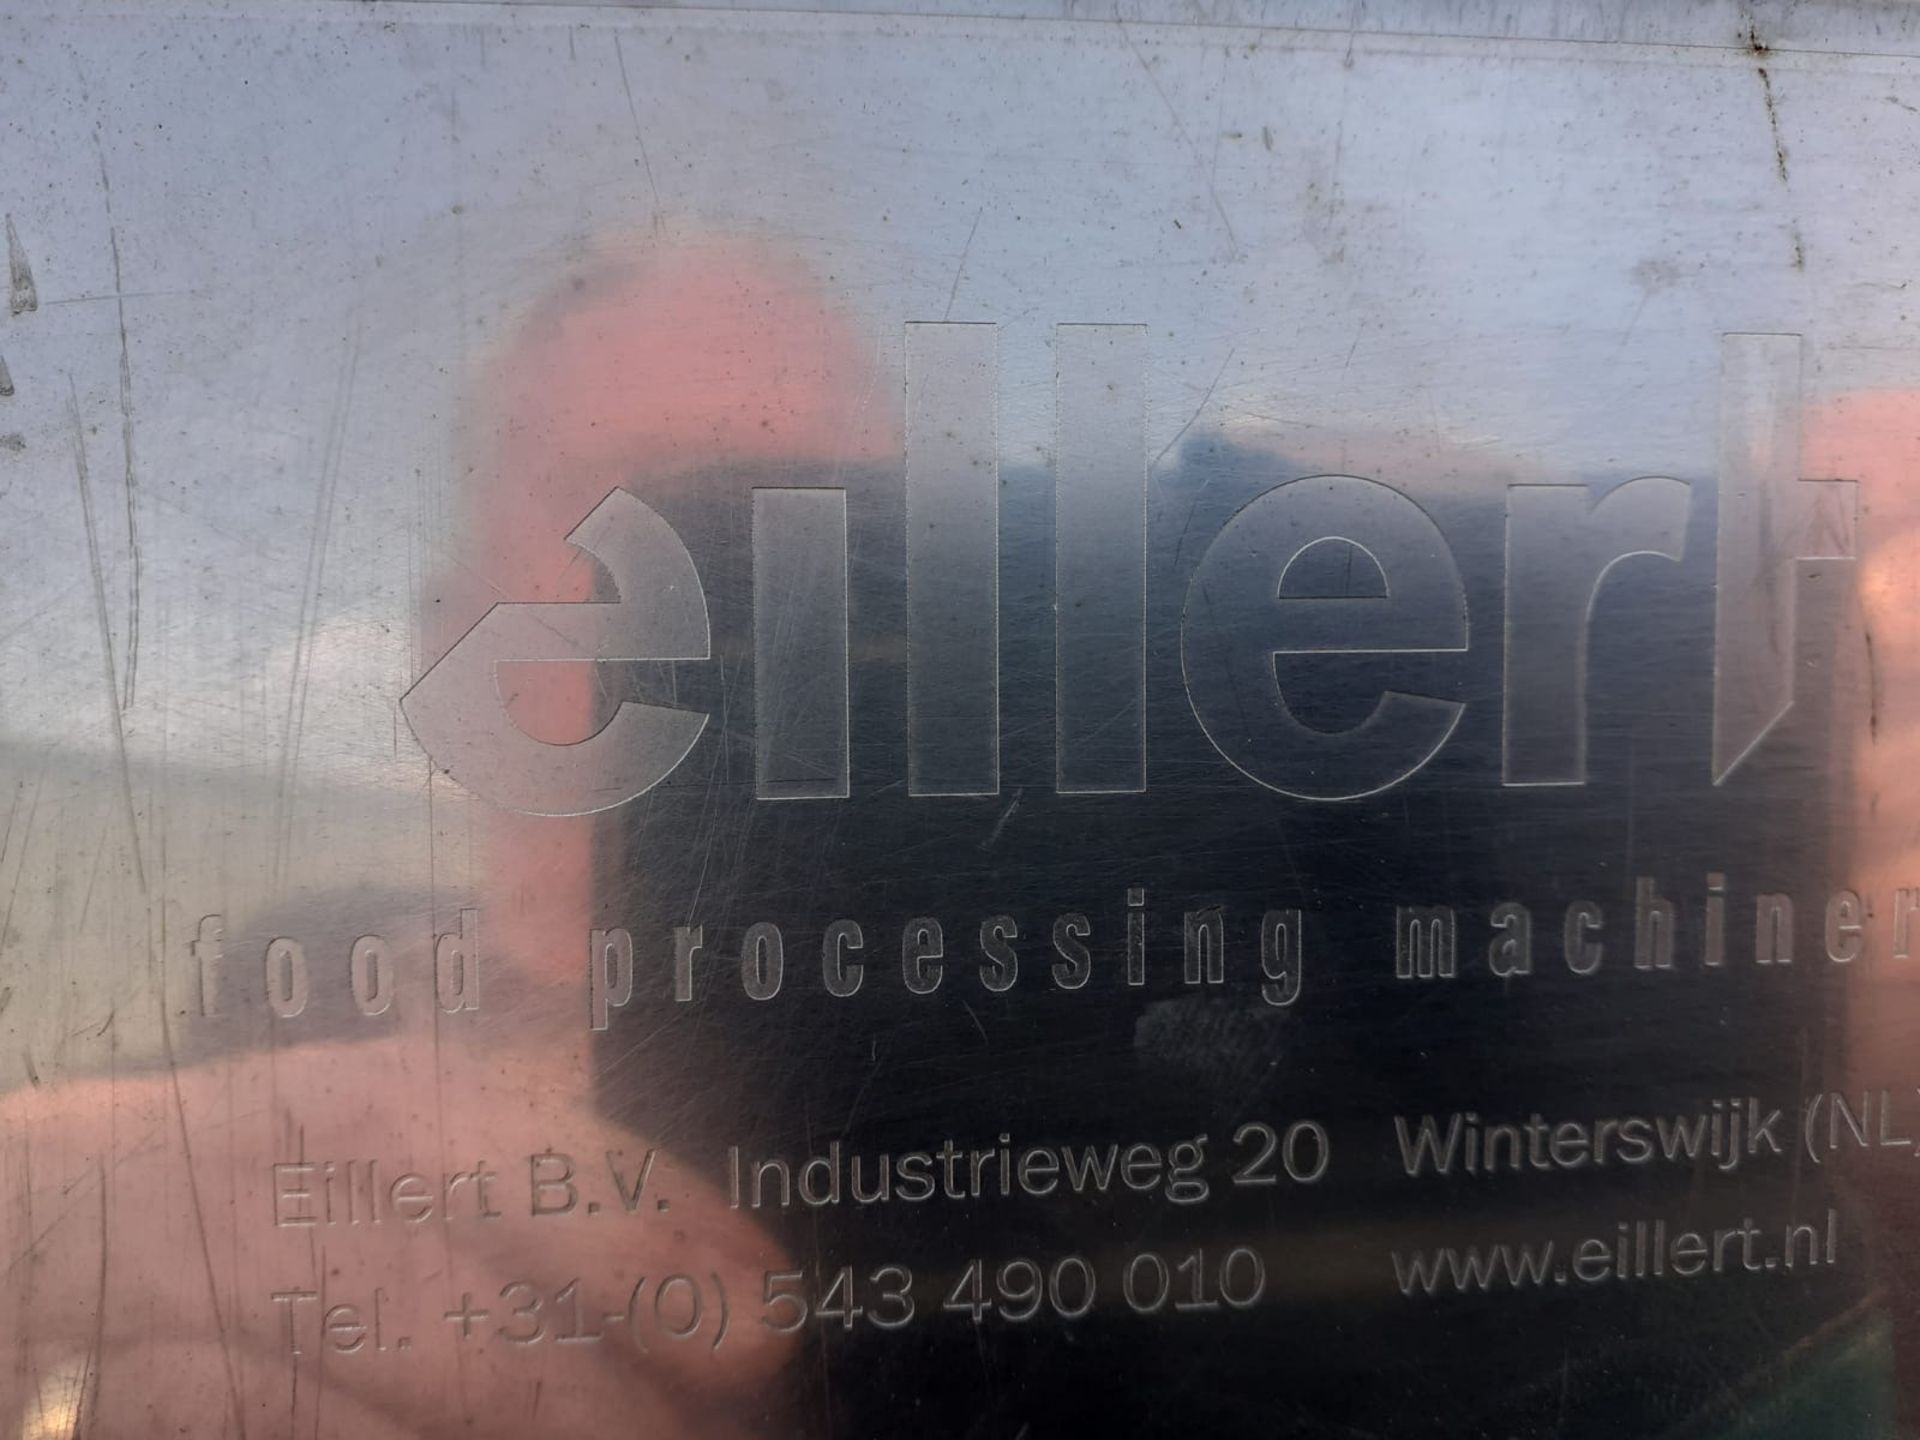 Eillert slicer - Image 3 of 3